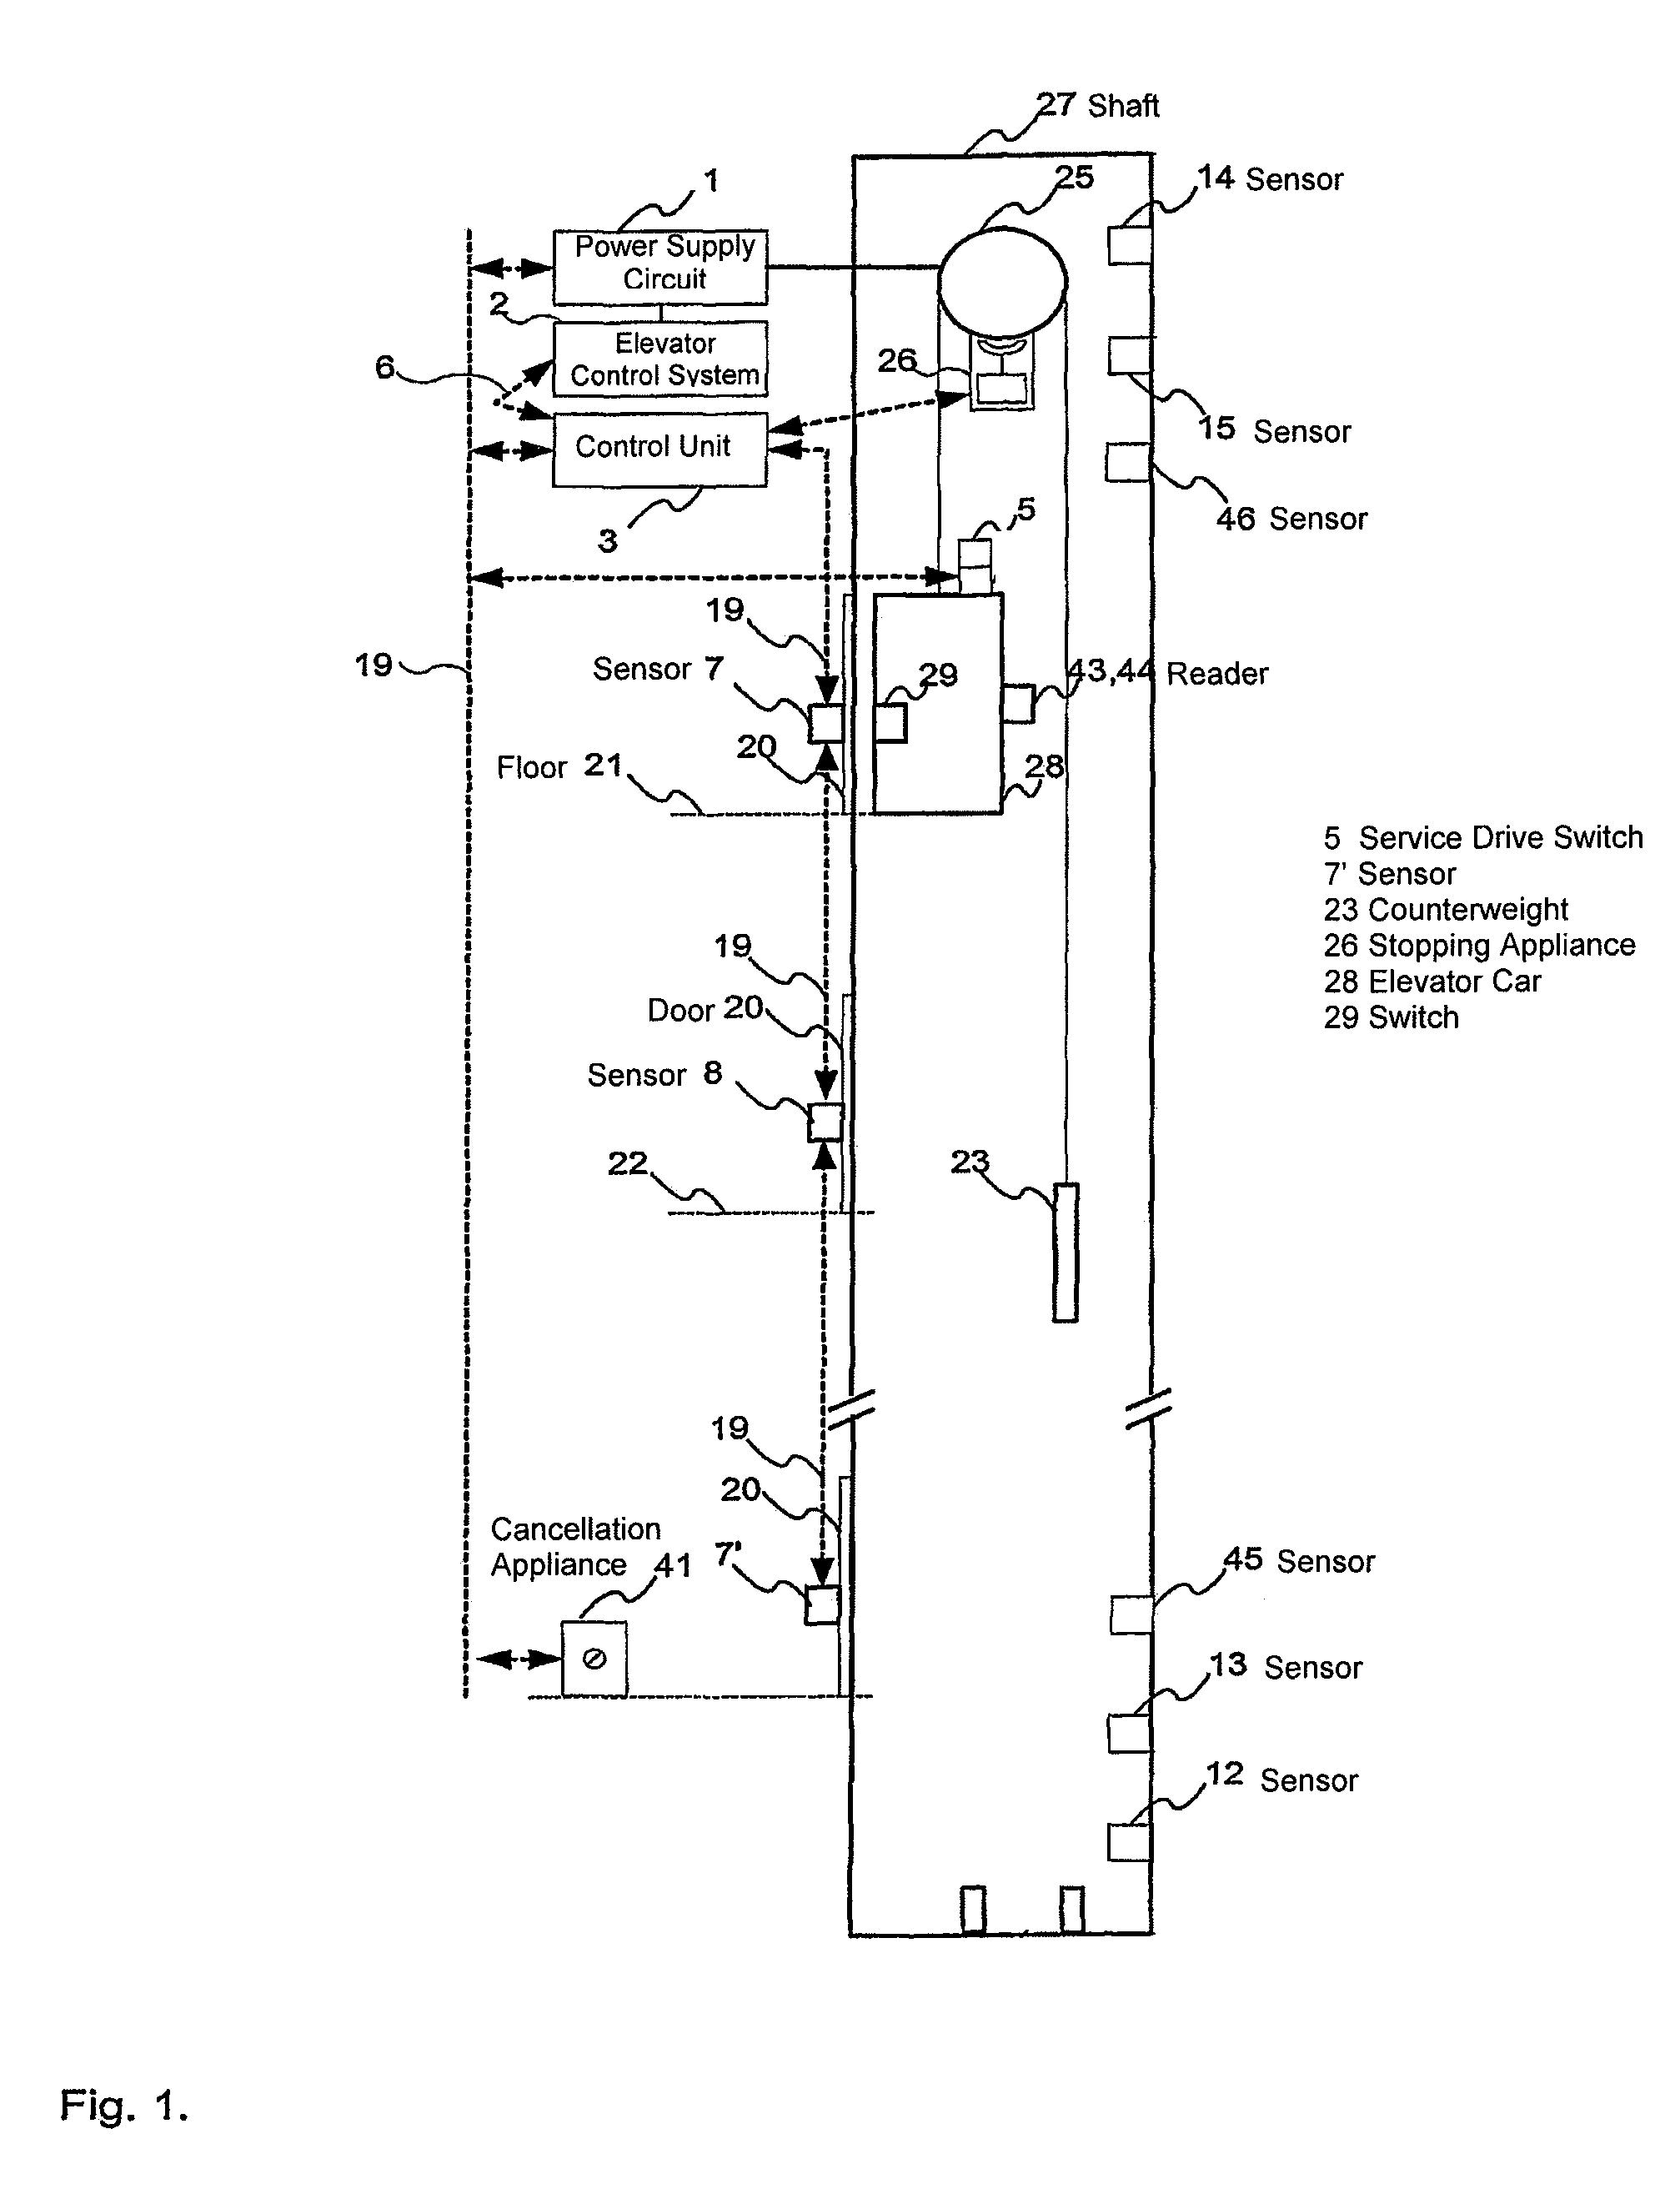 Safety arrangement of an elevator having sensors limiting extent of elevator travel